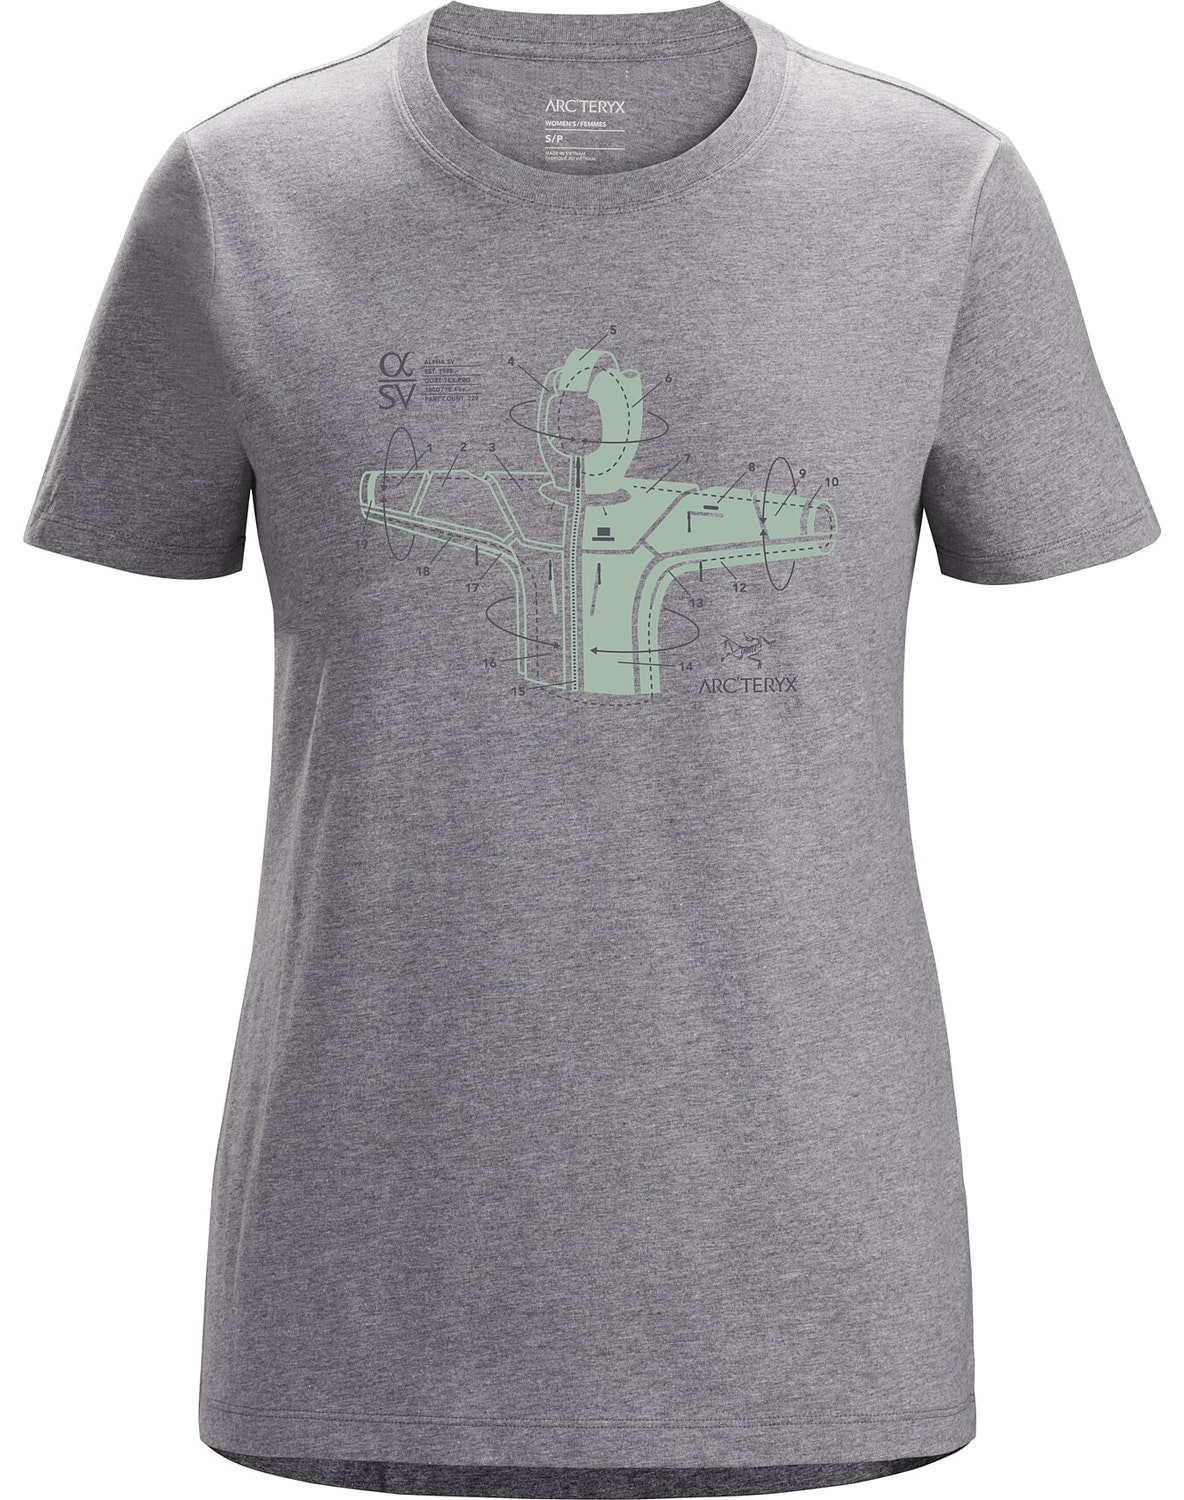 T-shirt Arc'teryx Arc'hive Donna Grigie - IT-36653196